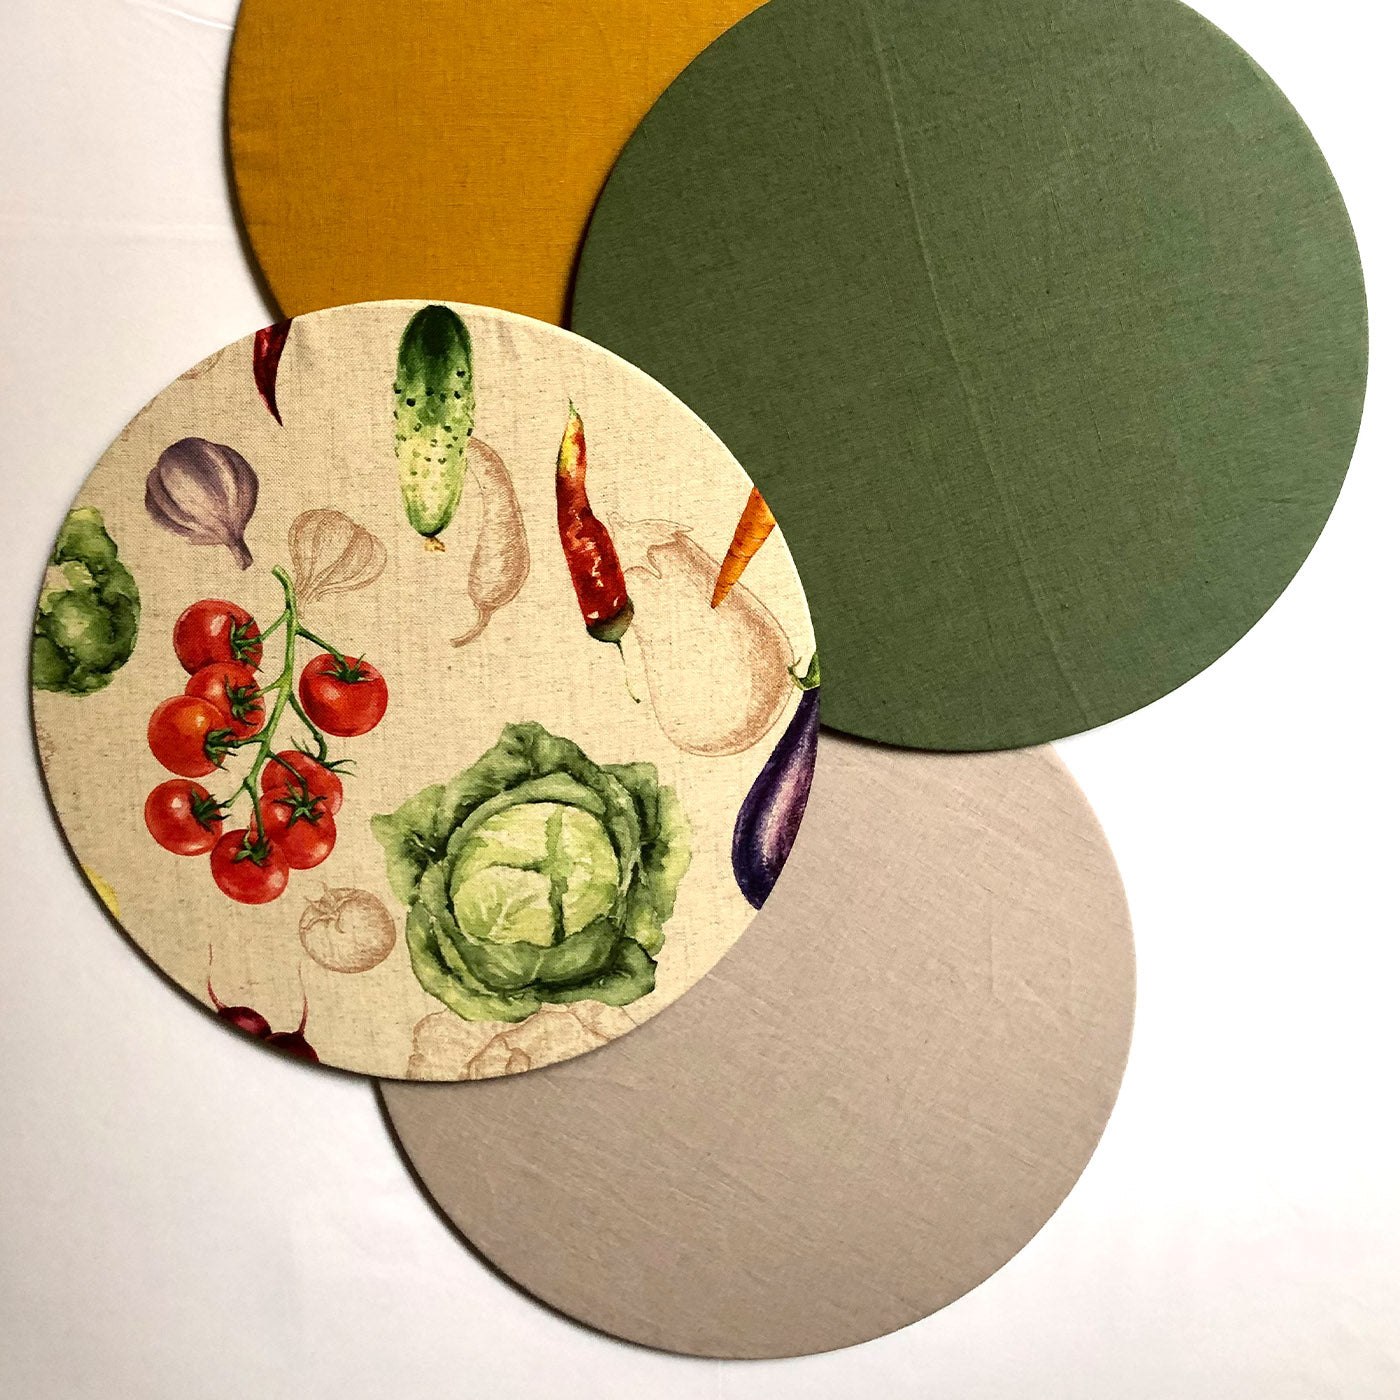 Cuffiette Vegetables Round Polychrome Placemat - Alternative view 2